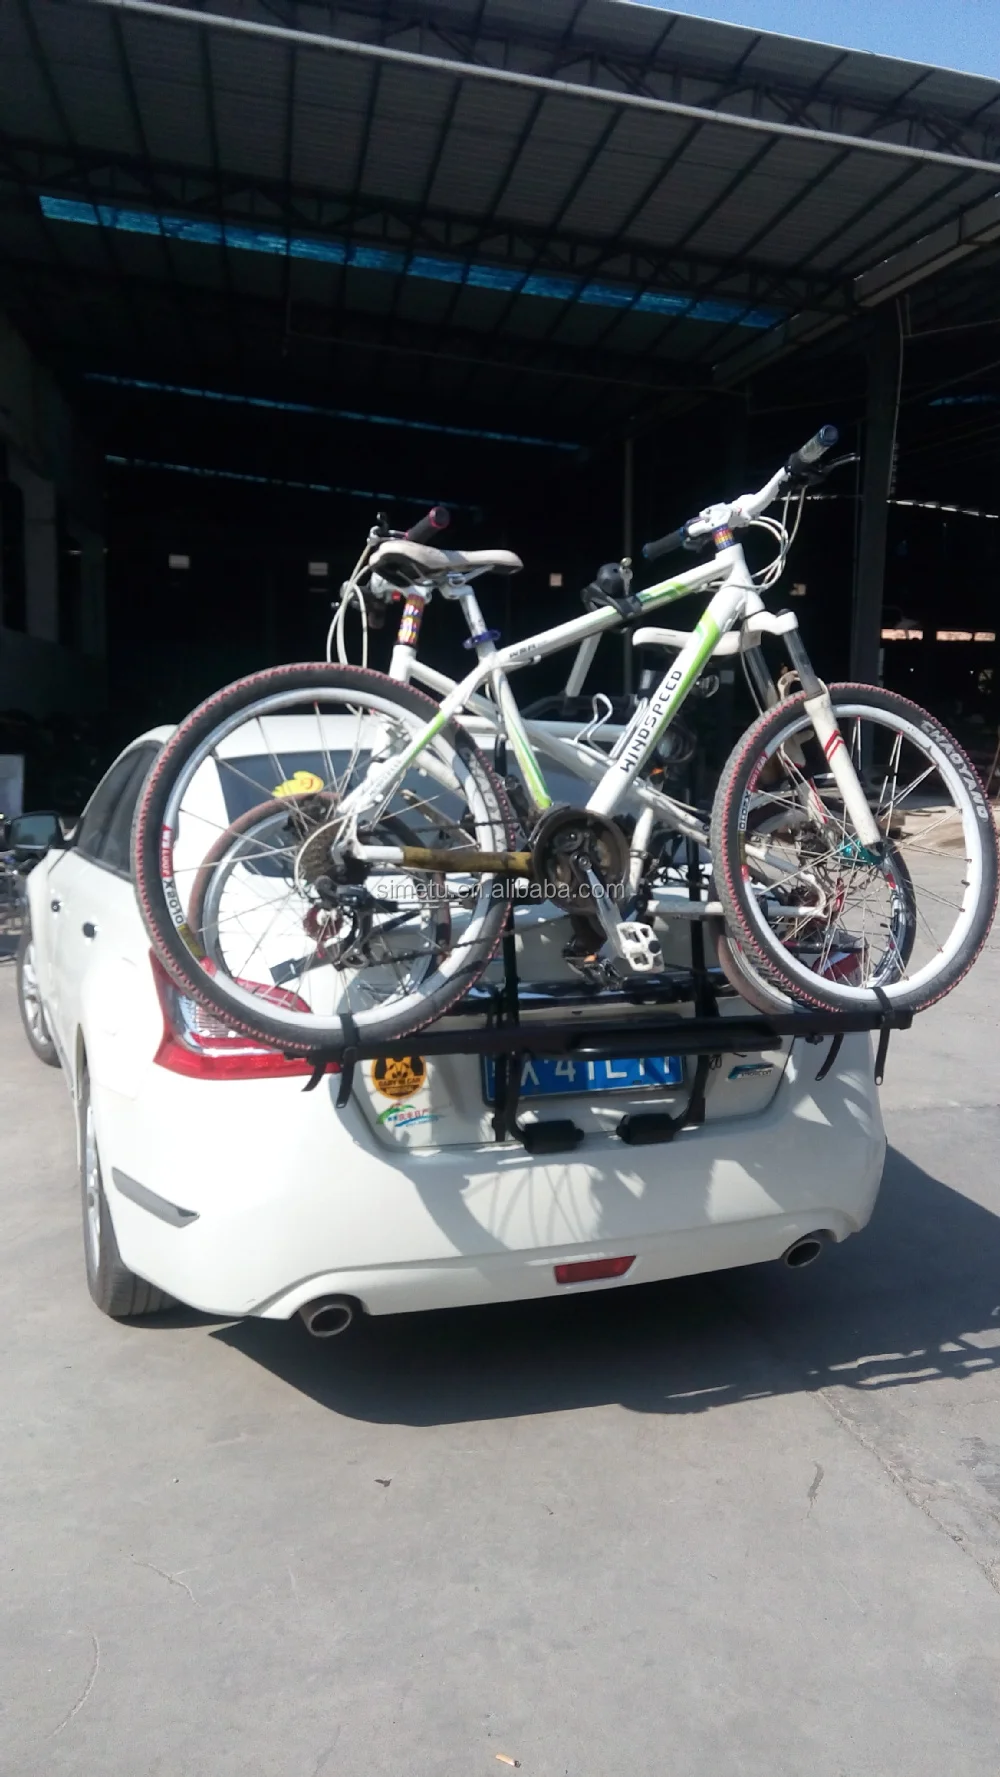 Suv Bike Racks For 2 Bikes Car Bicycle Accessories Buy Rear Bike Rack Portable Bike Rack Suv Bike Rack Product On Alibaba Com